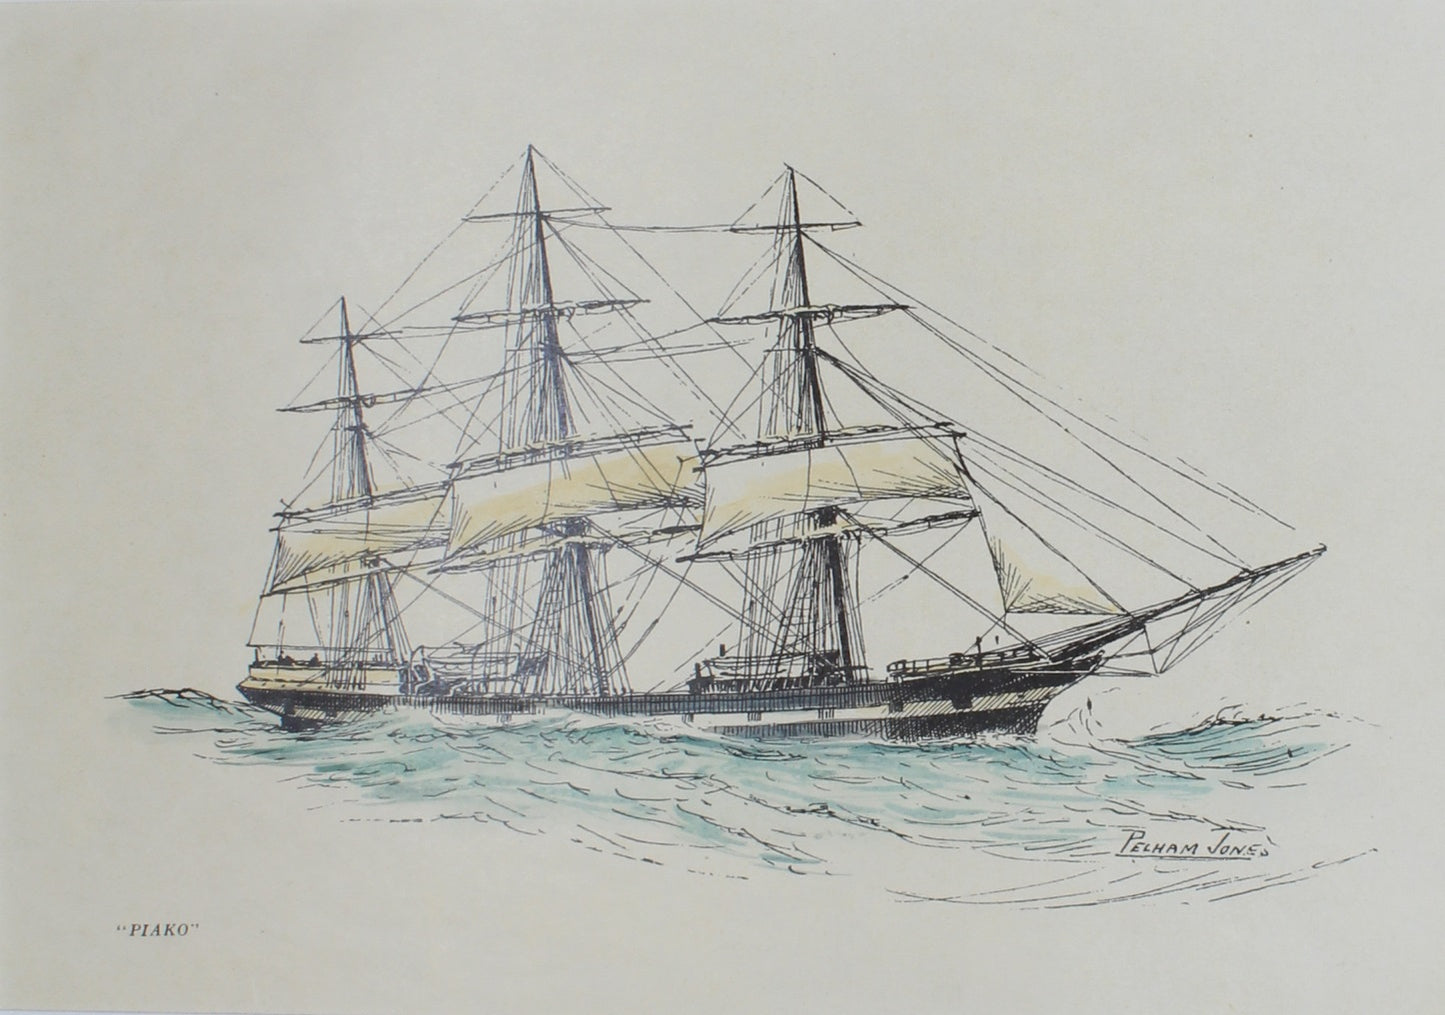 Marine, Bowen, Frank Charles, "Piako",  Sailing Ships of the London River, c1930